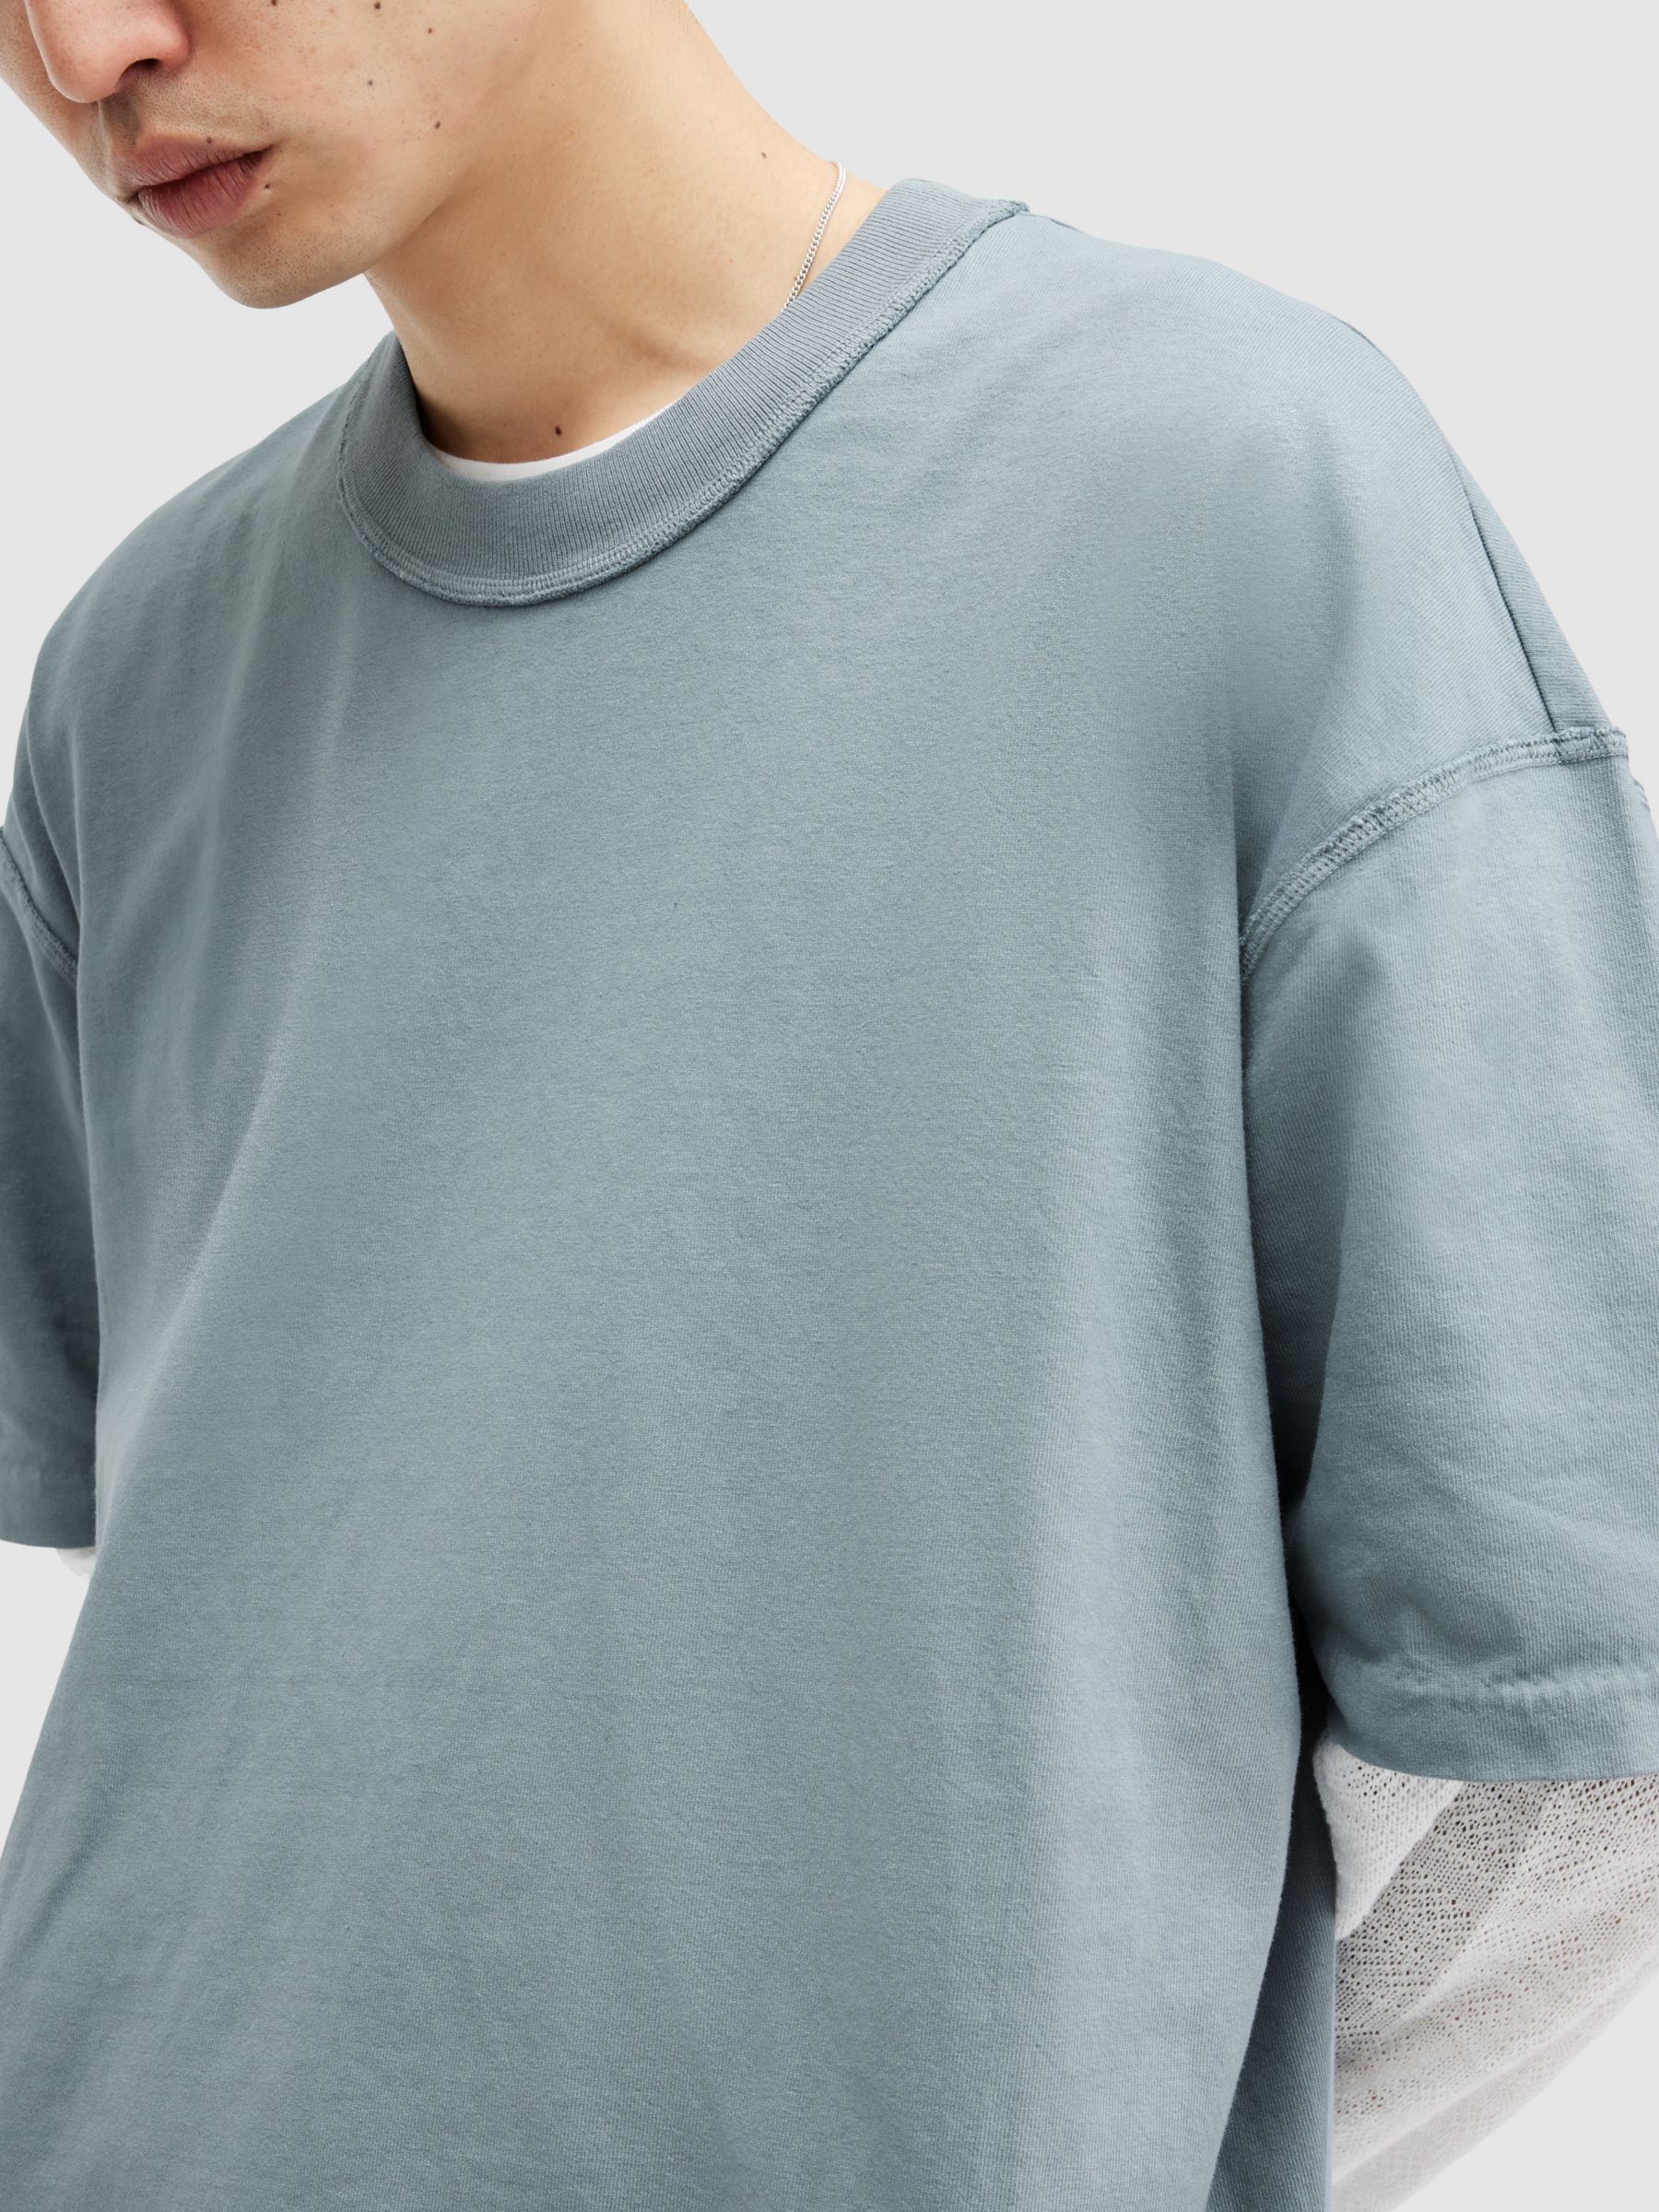 AllSaints Isac Short Sleeve Crew T-Shirt, Dusty Blue, XS